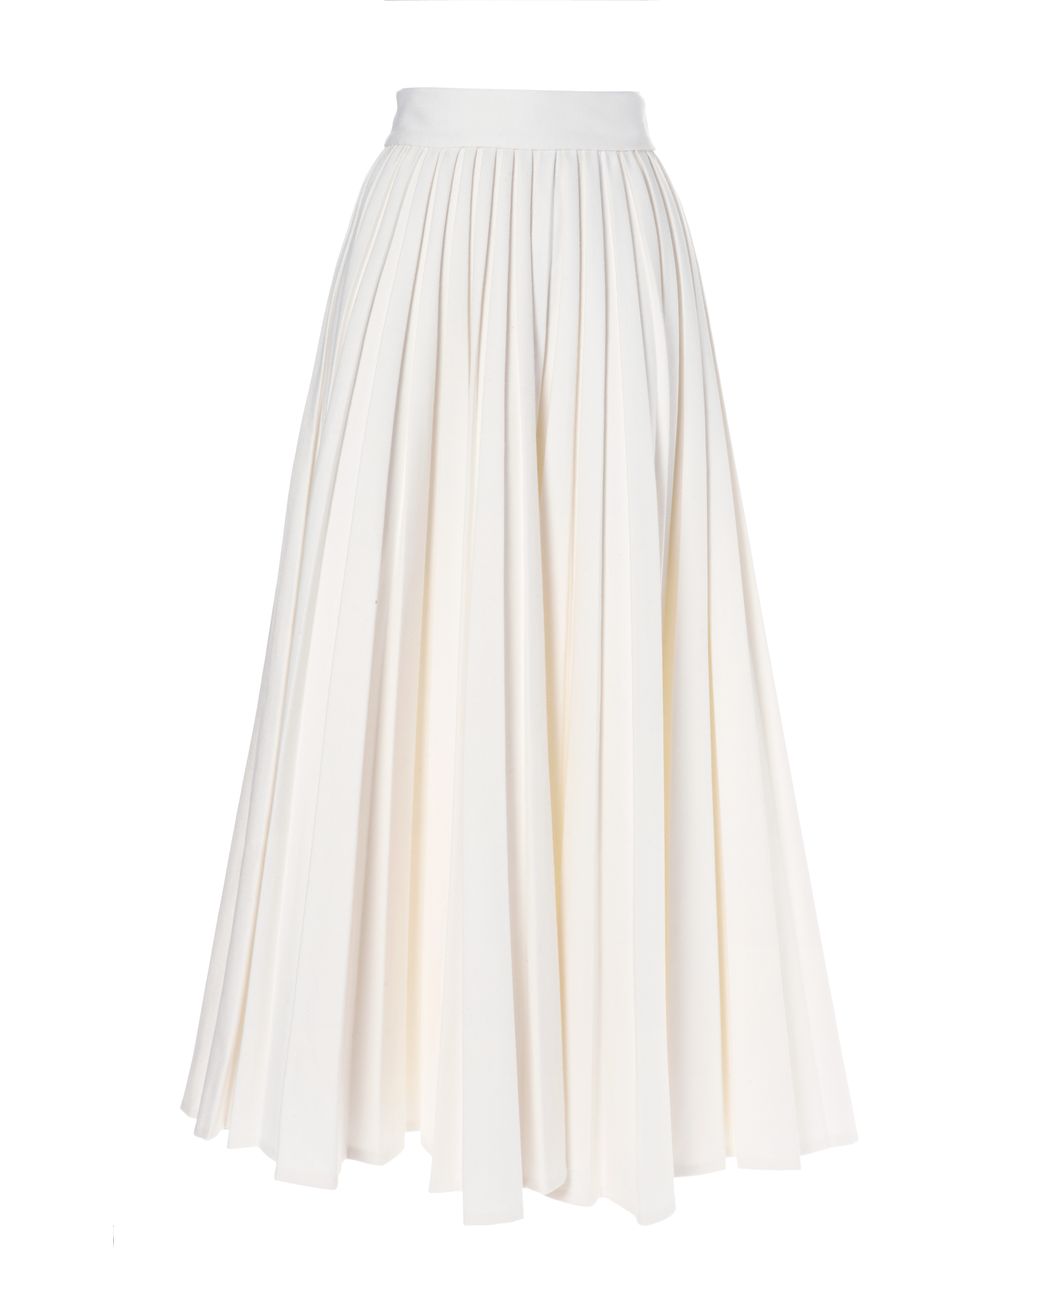 Emilia Wickstead Pleated Skirt in White | Lyst